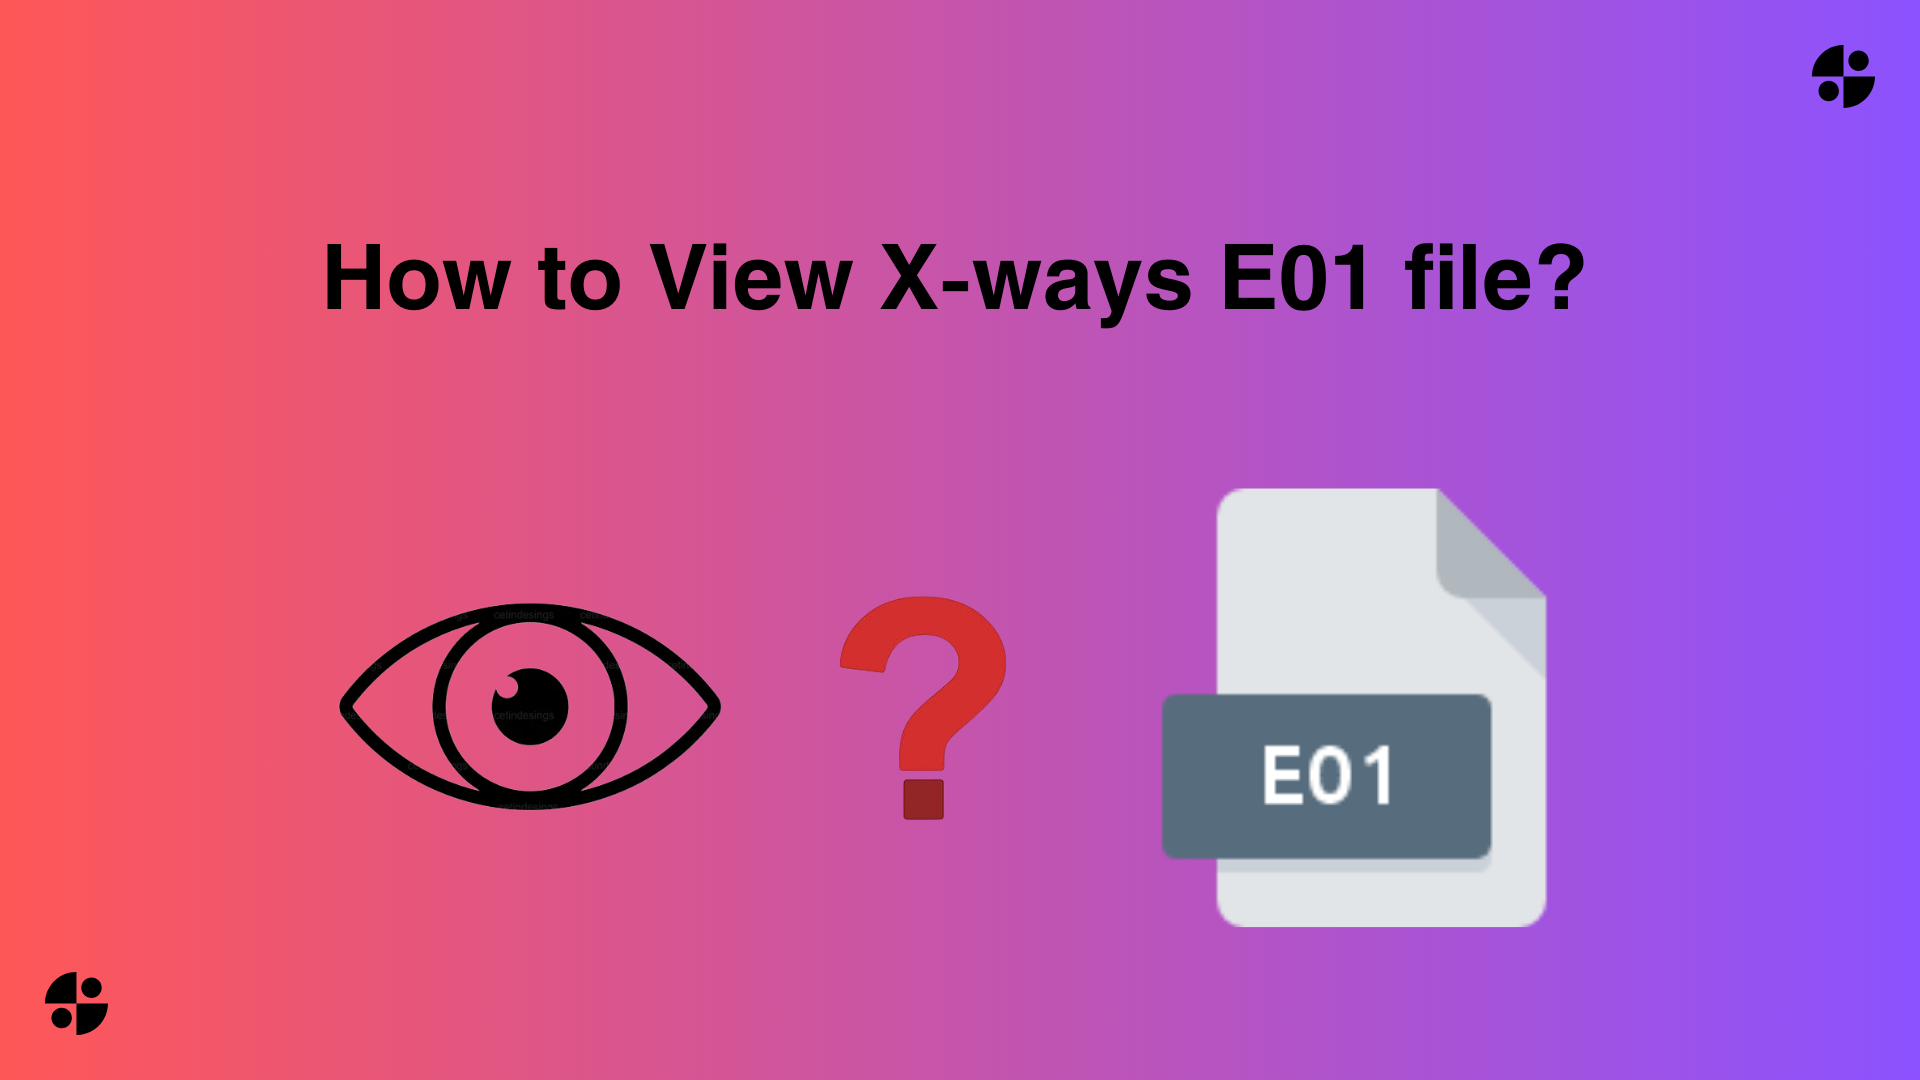 View X-ways E01 file